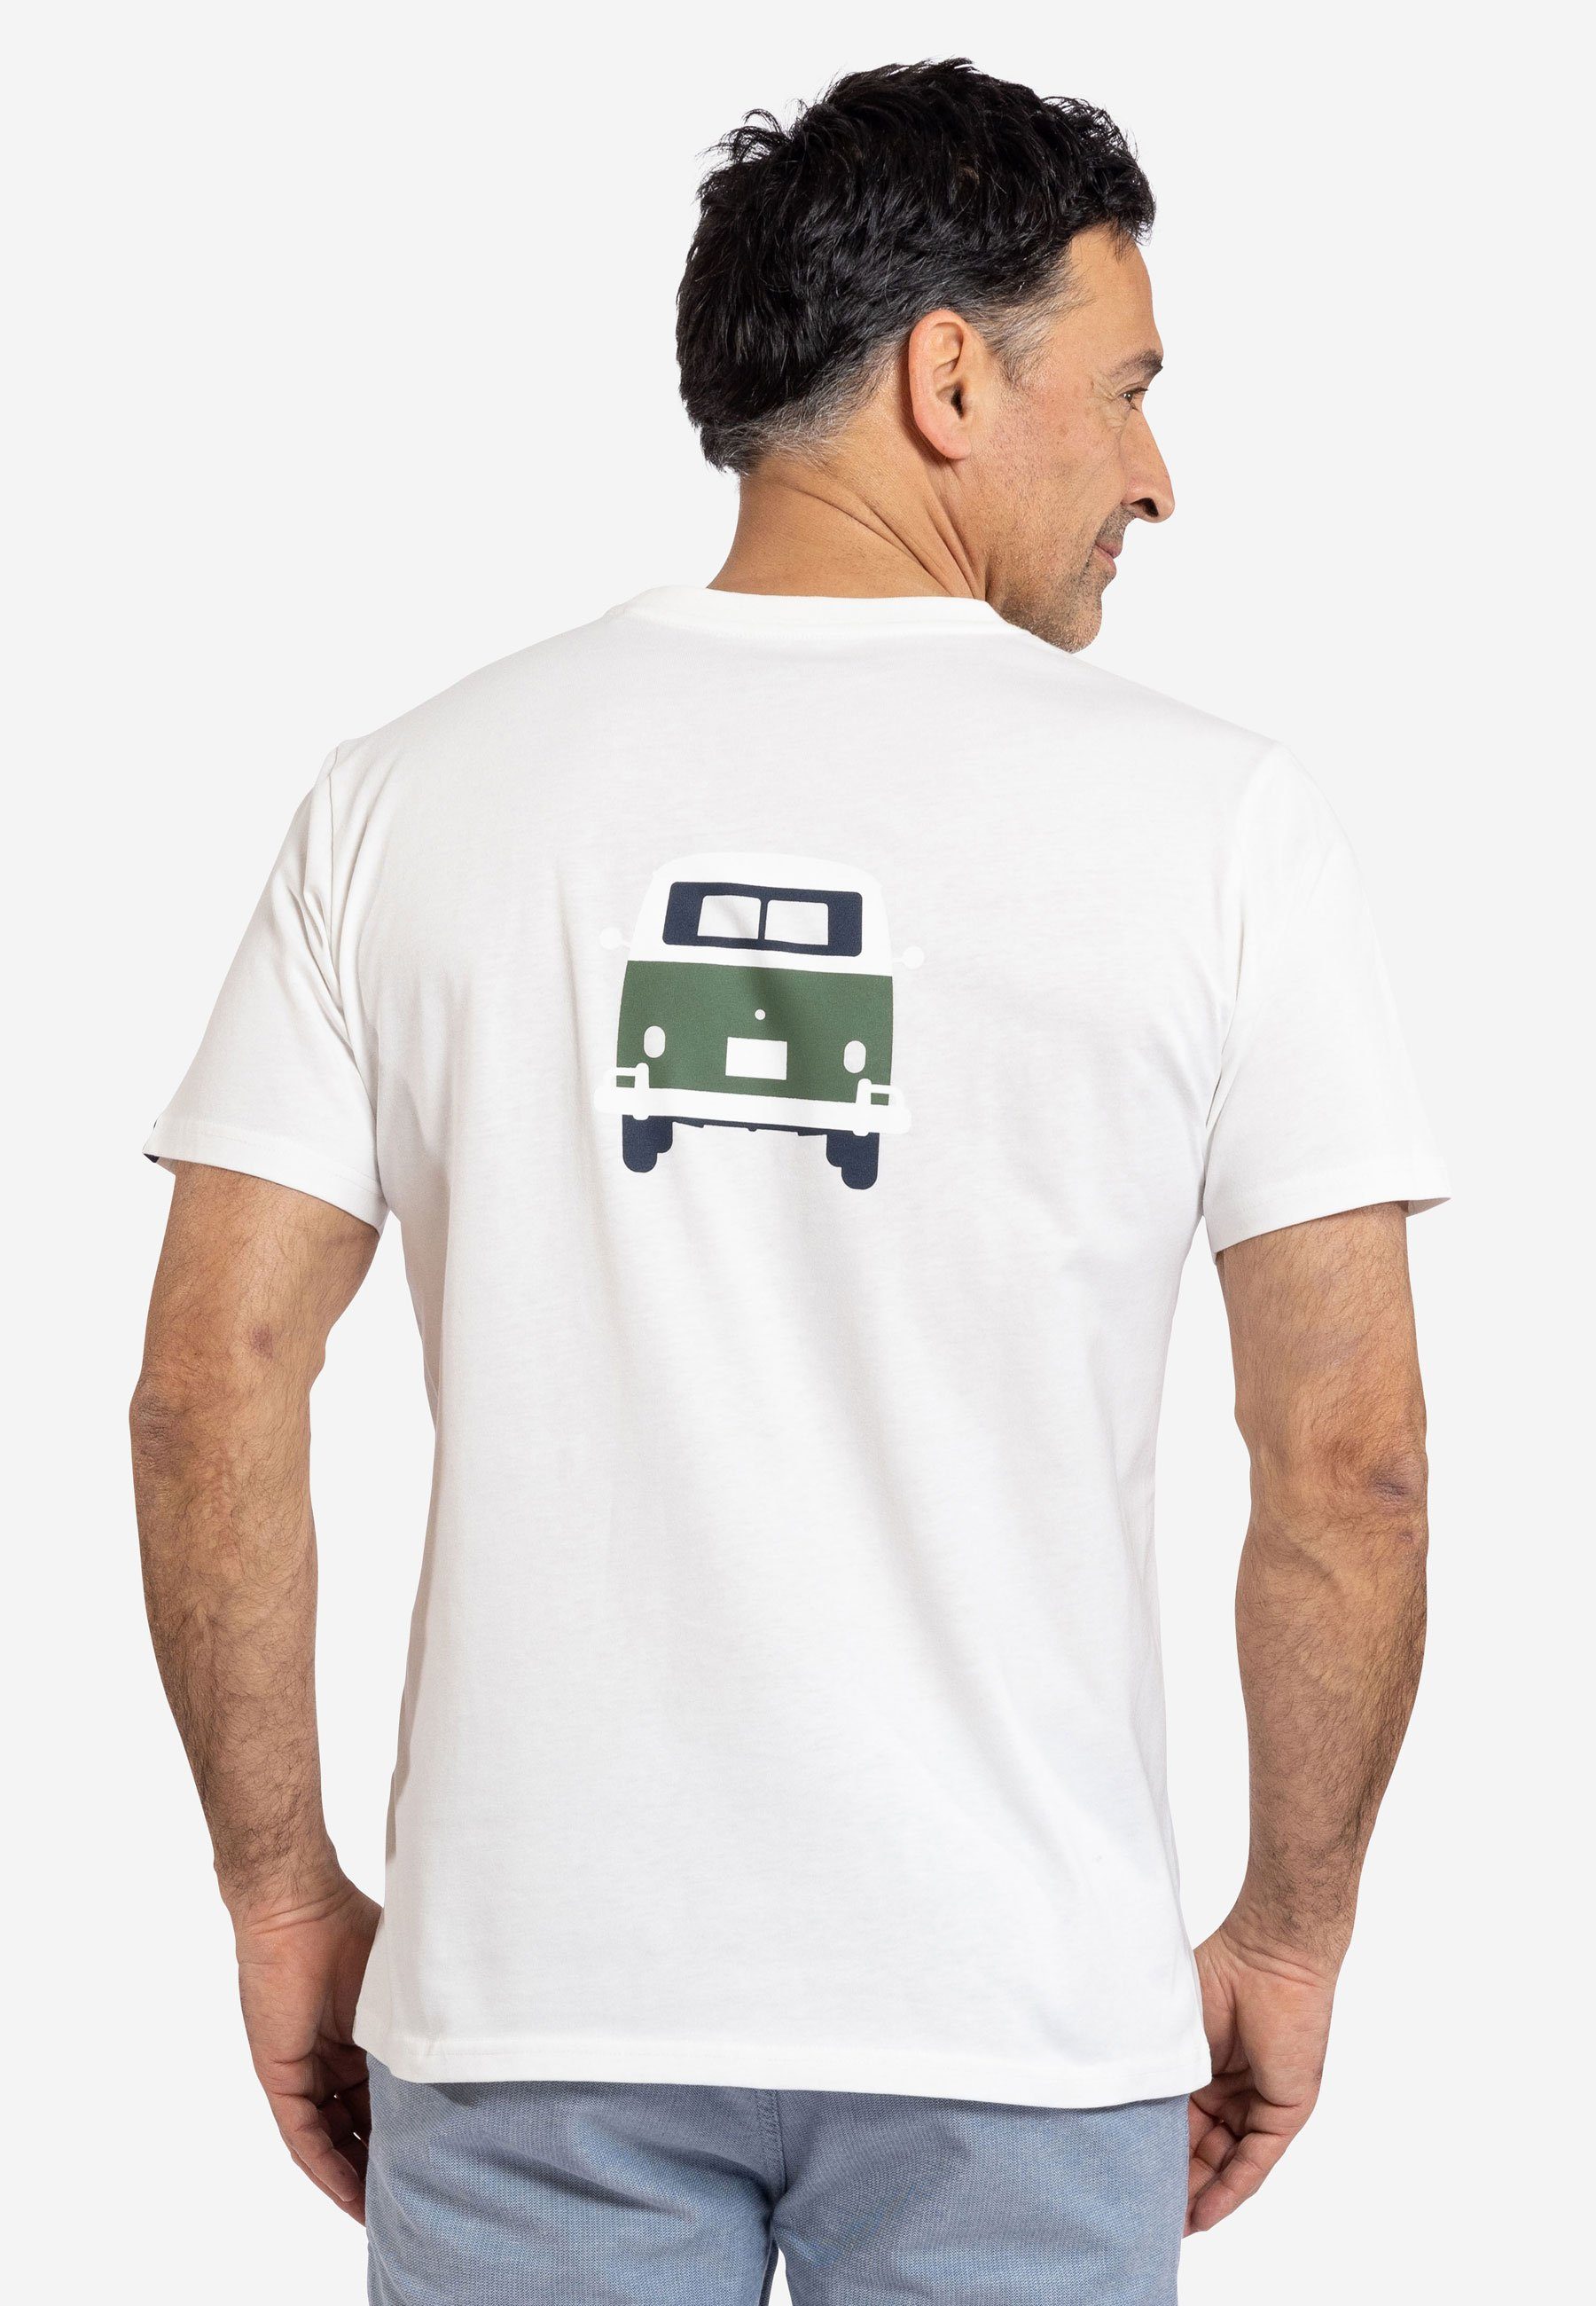 Methusalem VW T-Shirt Rücken Elkline White lizenzierter Print Brust Bulli